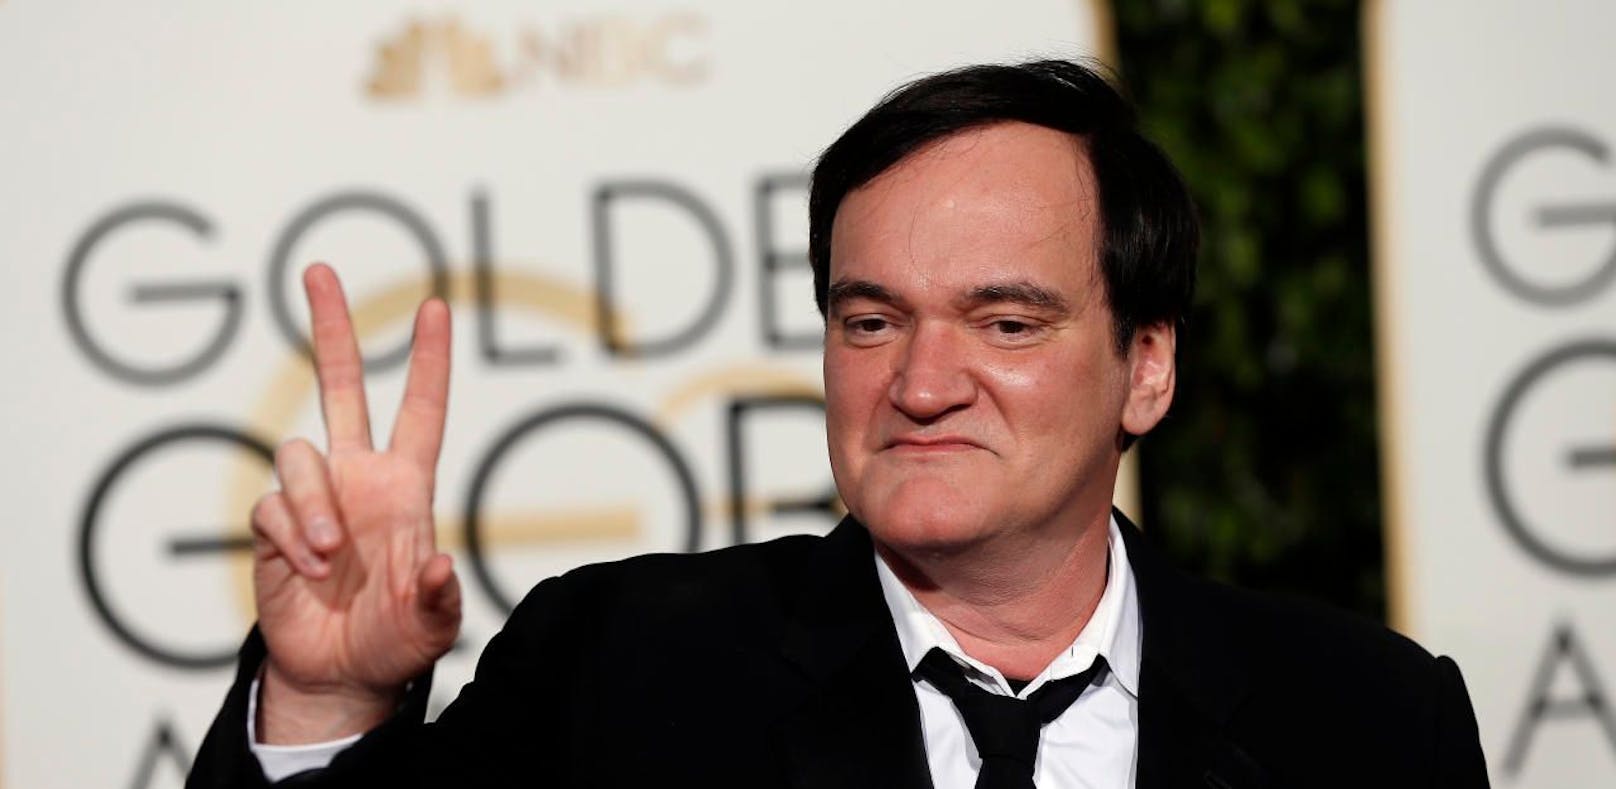 Tarantino arbeitet an Film über die Manson Family